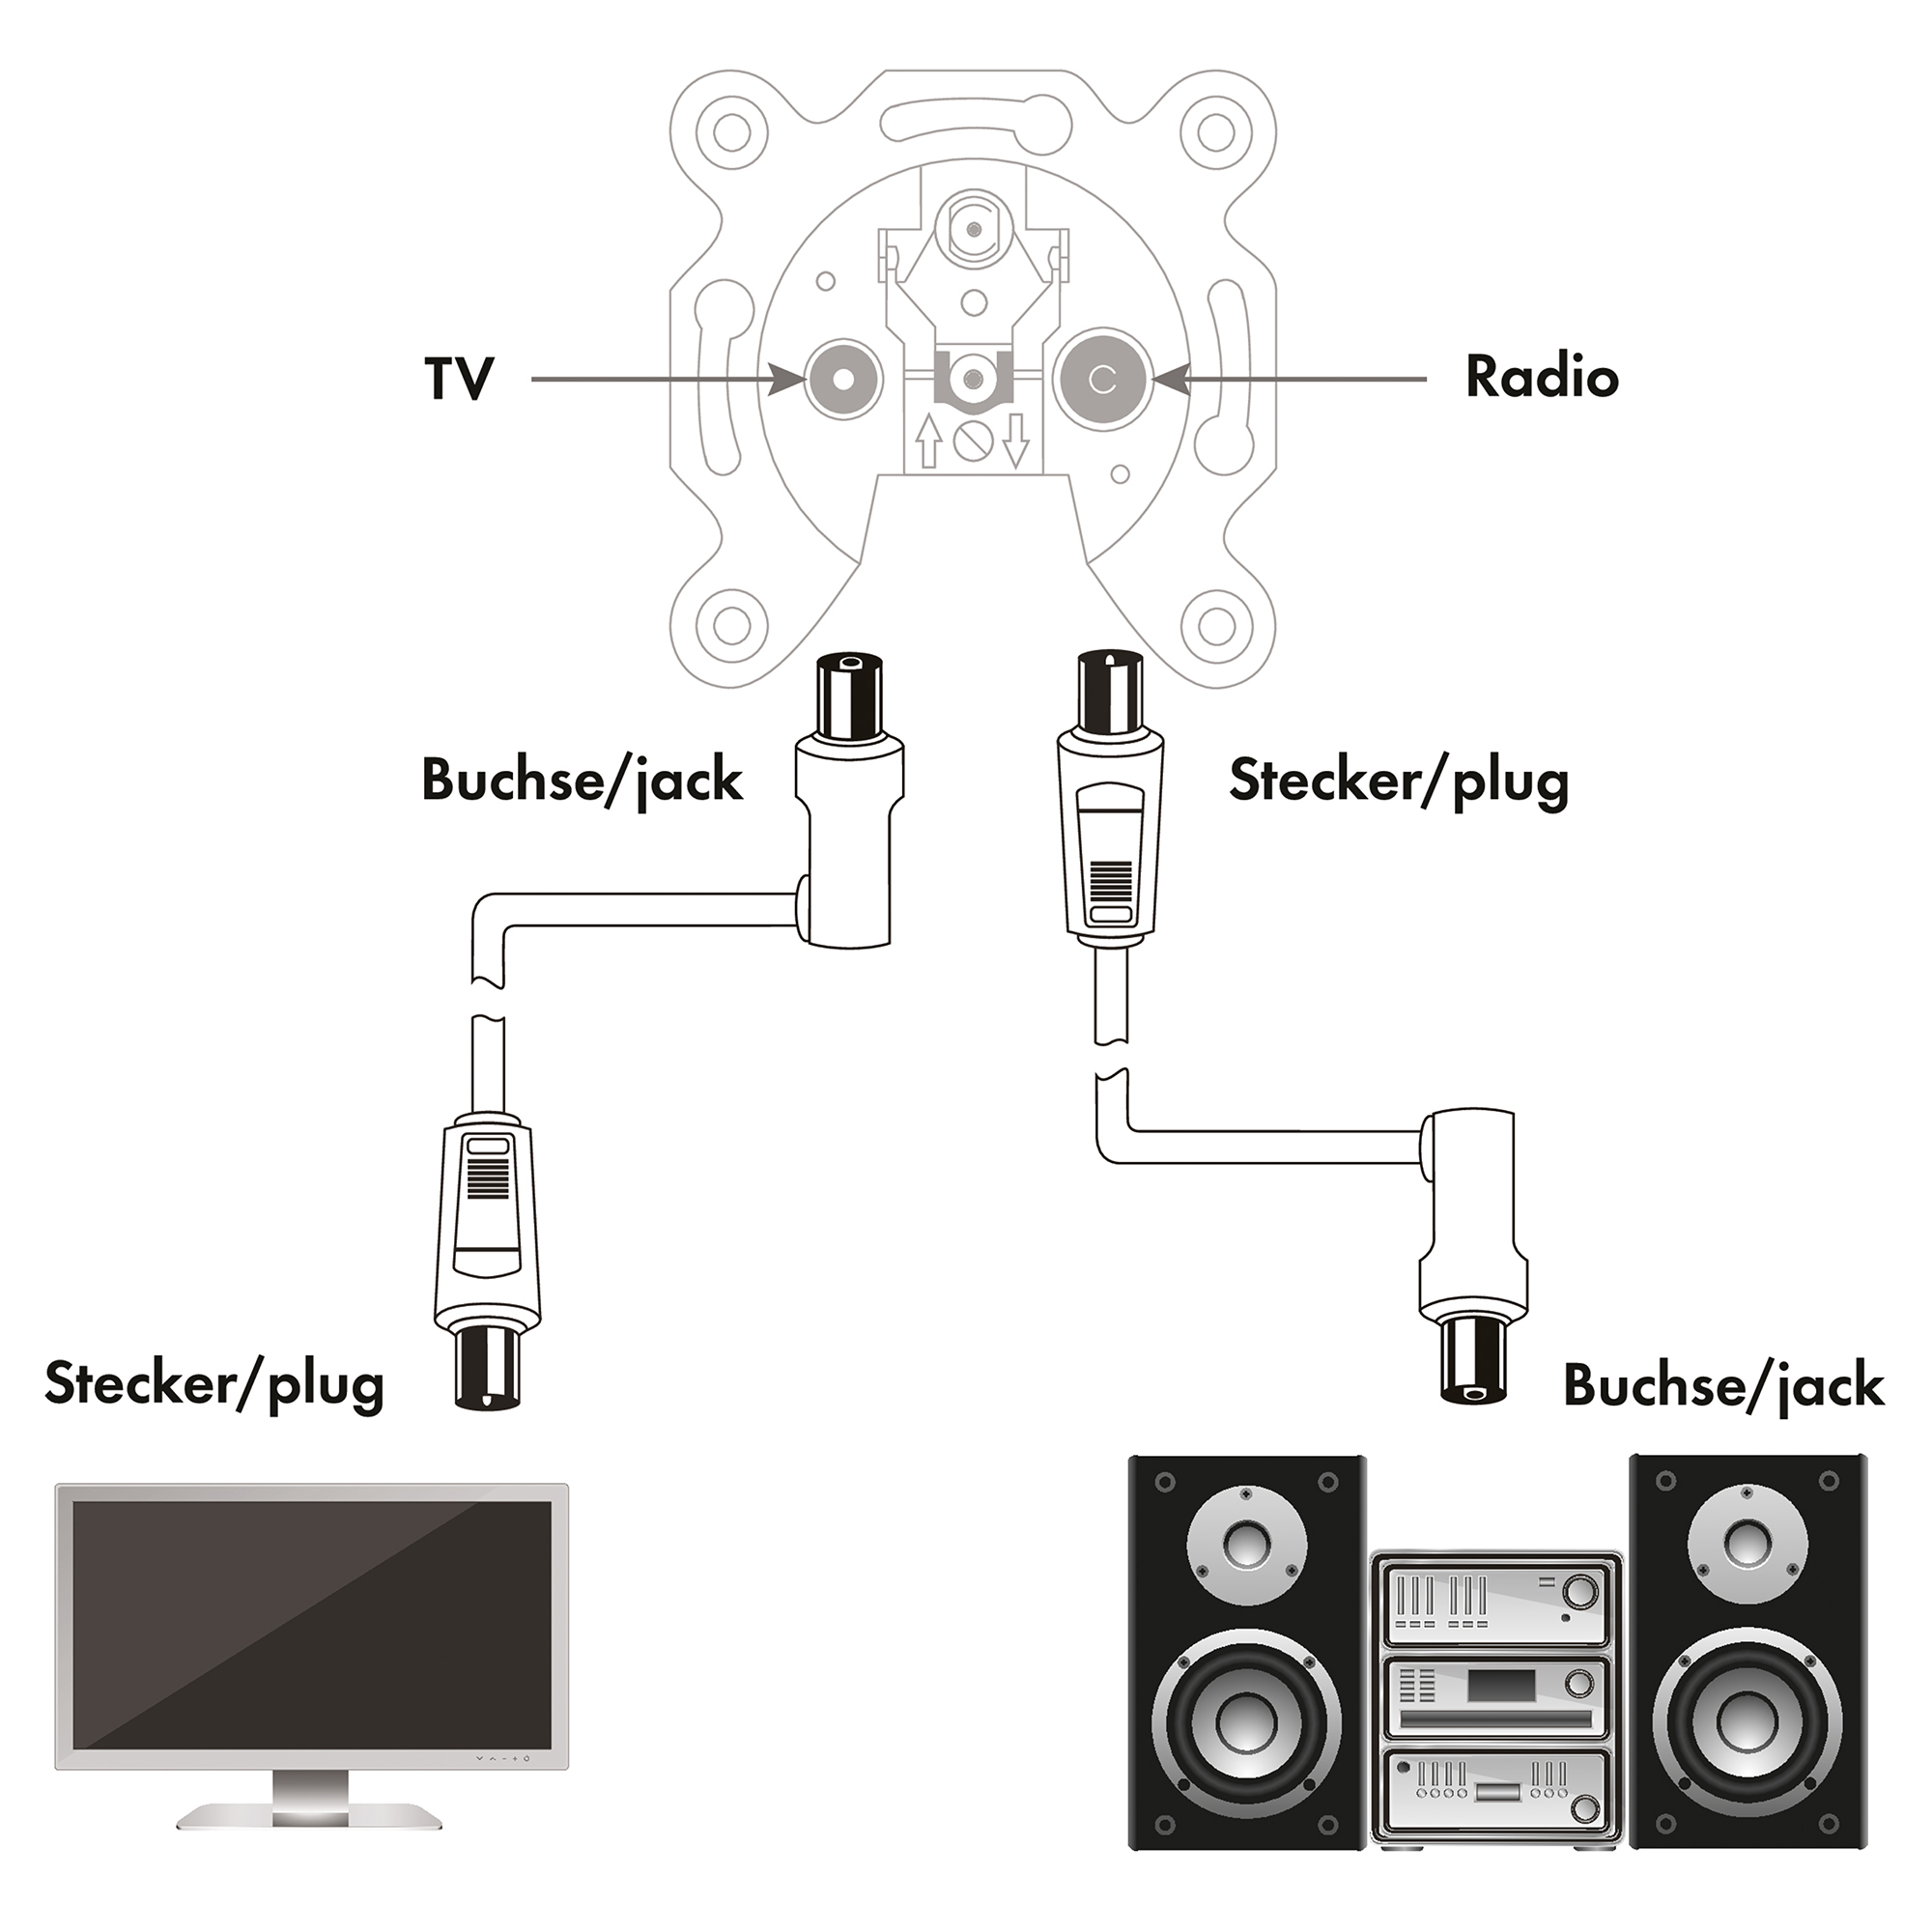 Winkelbuchse (75 533- dB) Stecker IEC Antennen Anschlusskabel -KVKW15 IEC zu SCHWAIGER